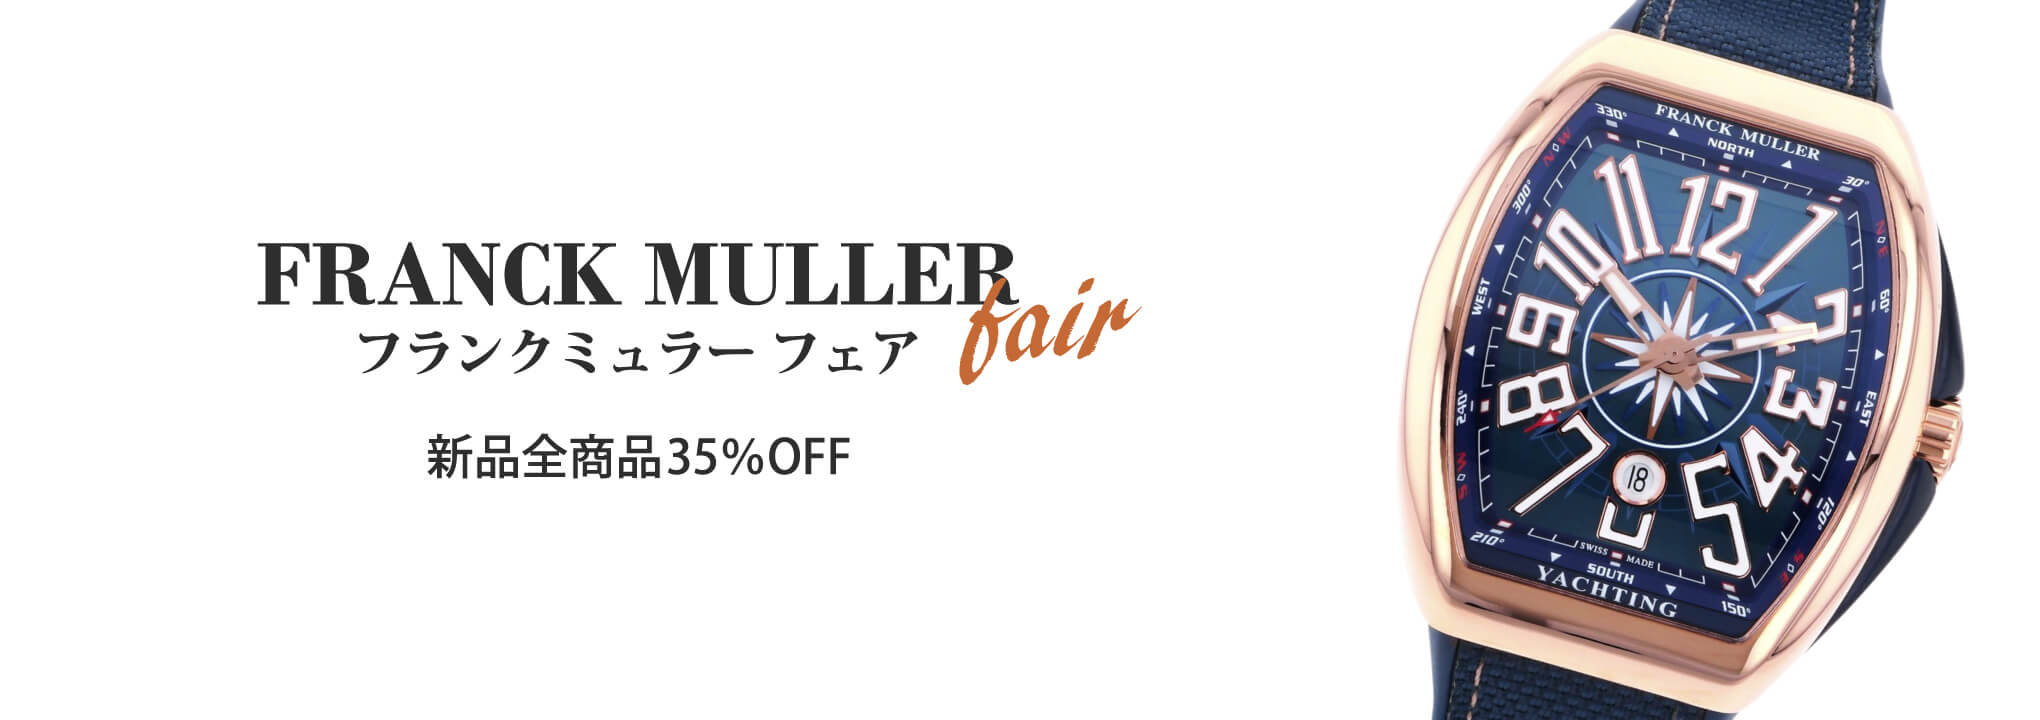 Franck Muller Fair